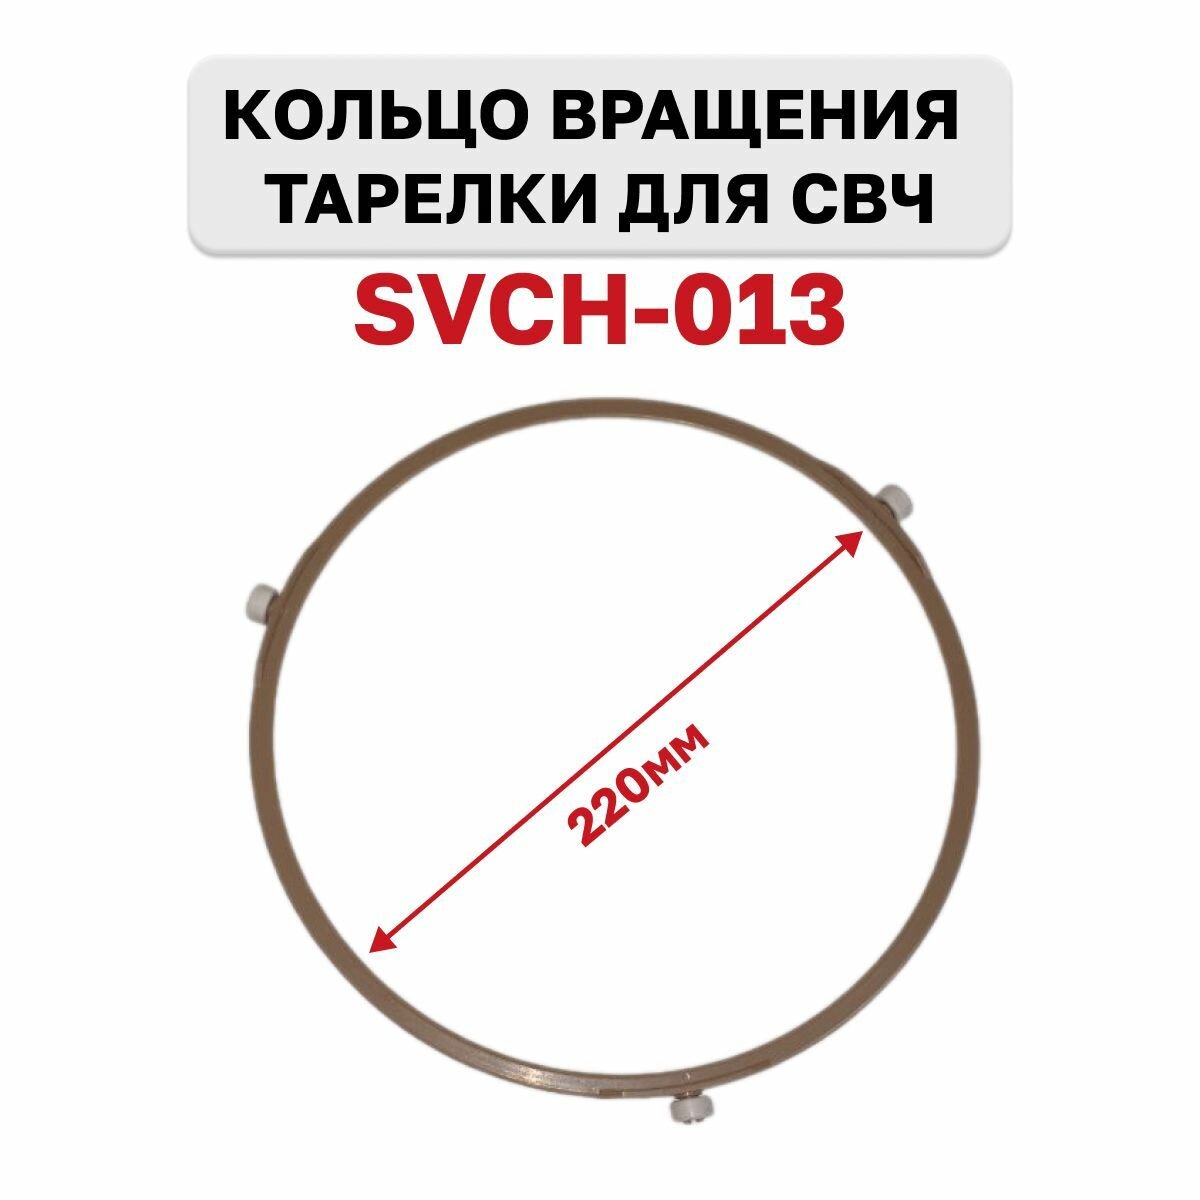 Кольцо вращения тарелки микроволновой печи СВЧ  диаметр 22см (220мм) SVCH-013